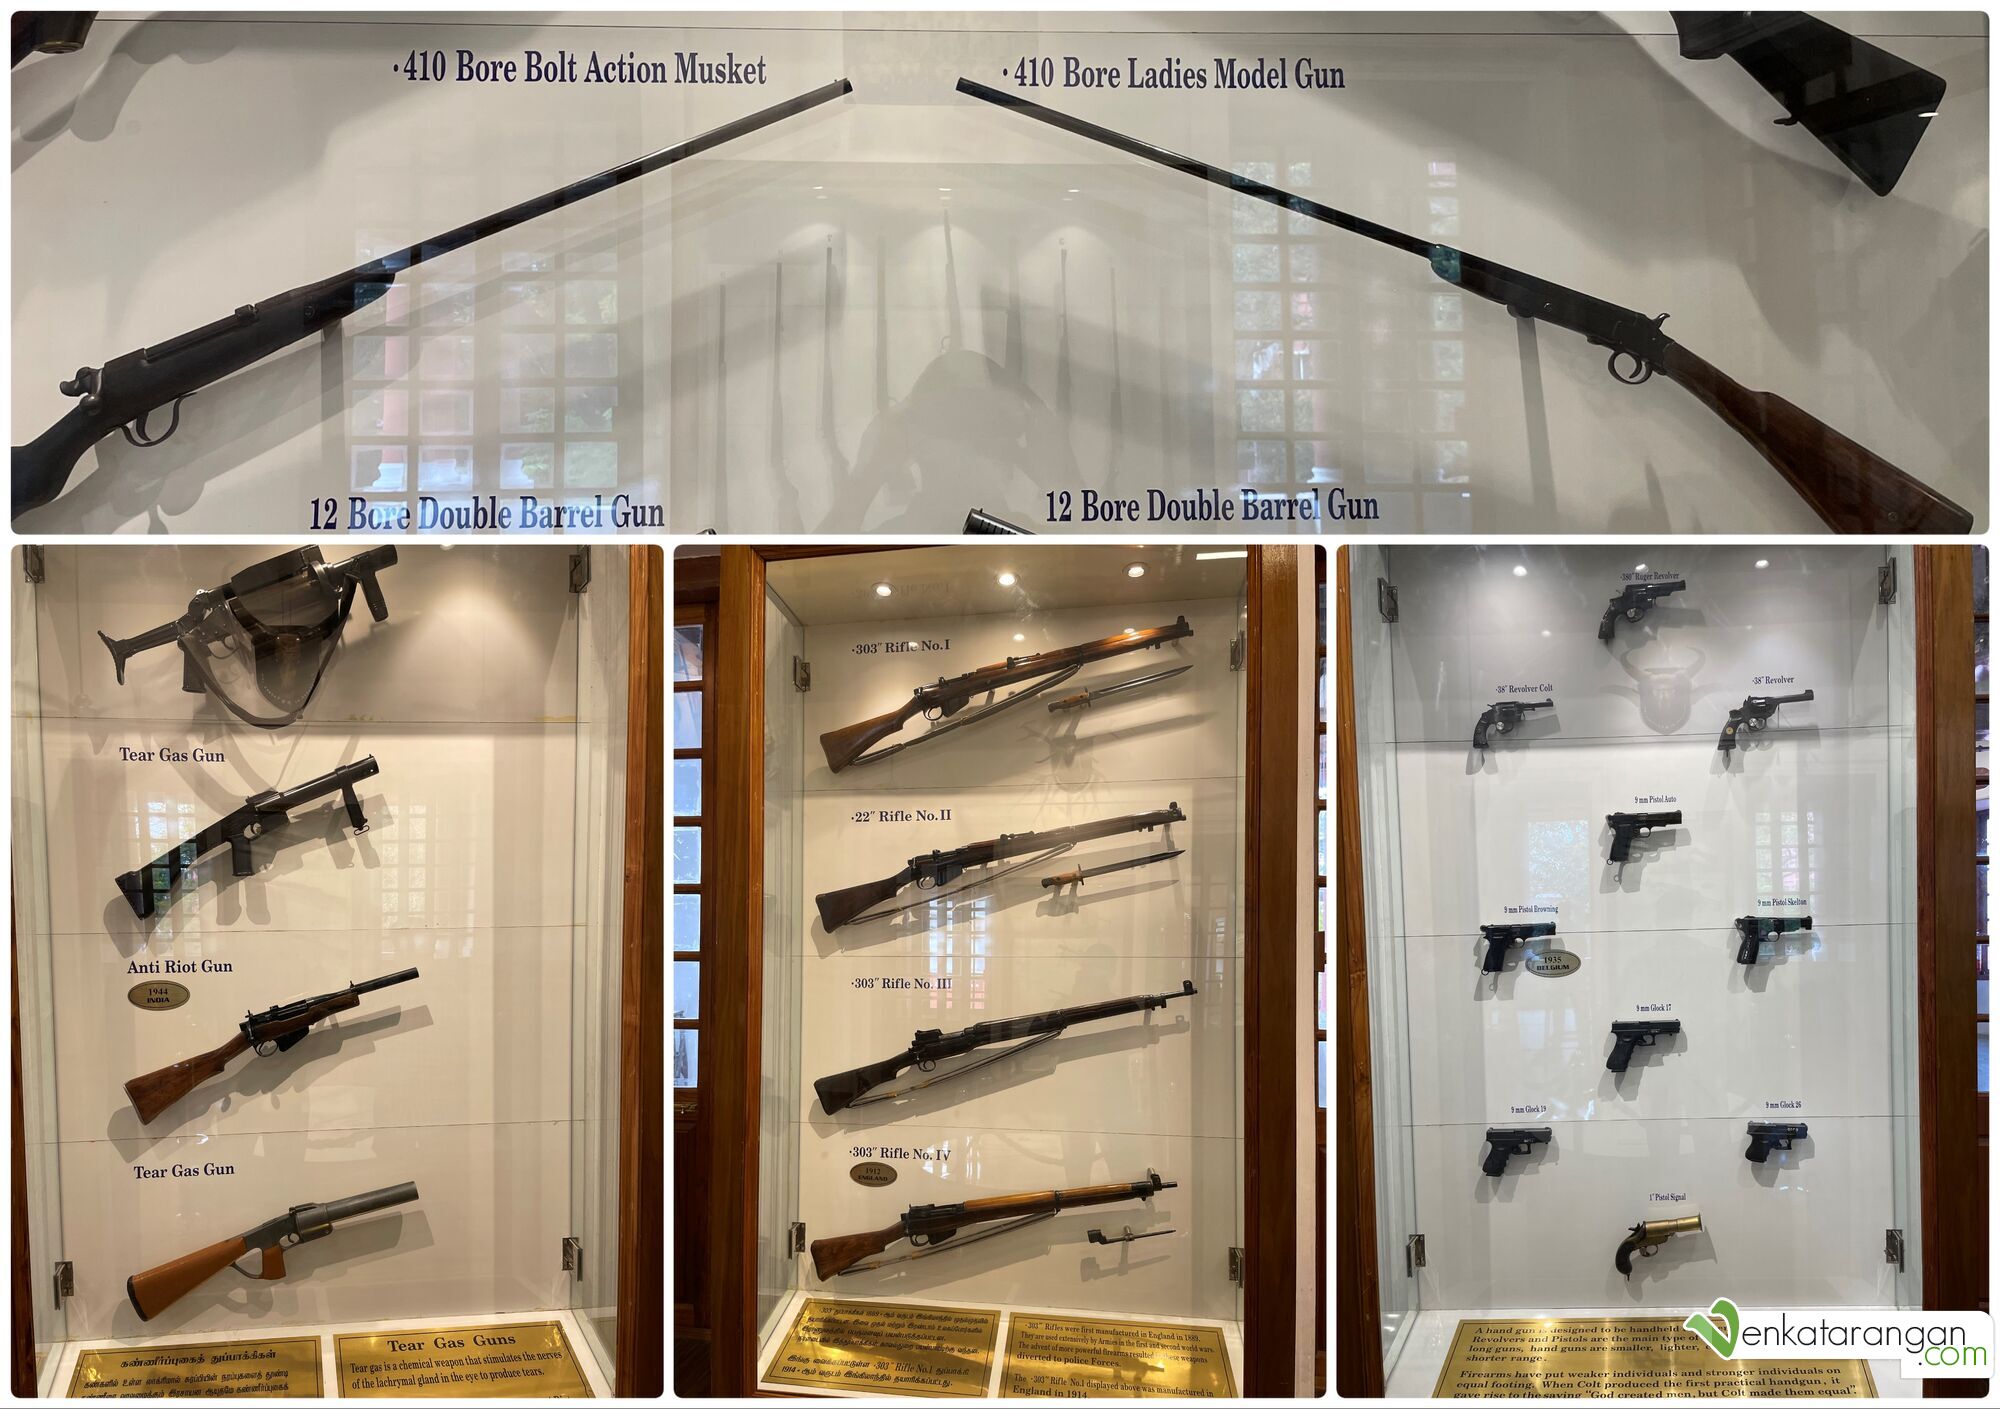 Tear Gas Guns, Rifles, Revolvers, Musket, Ladies Model Gun and more on display